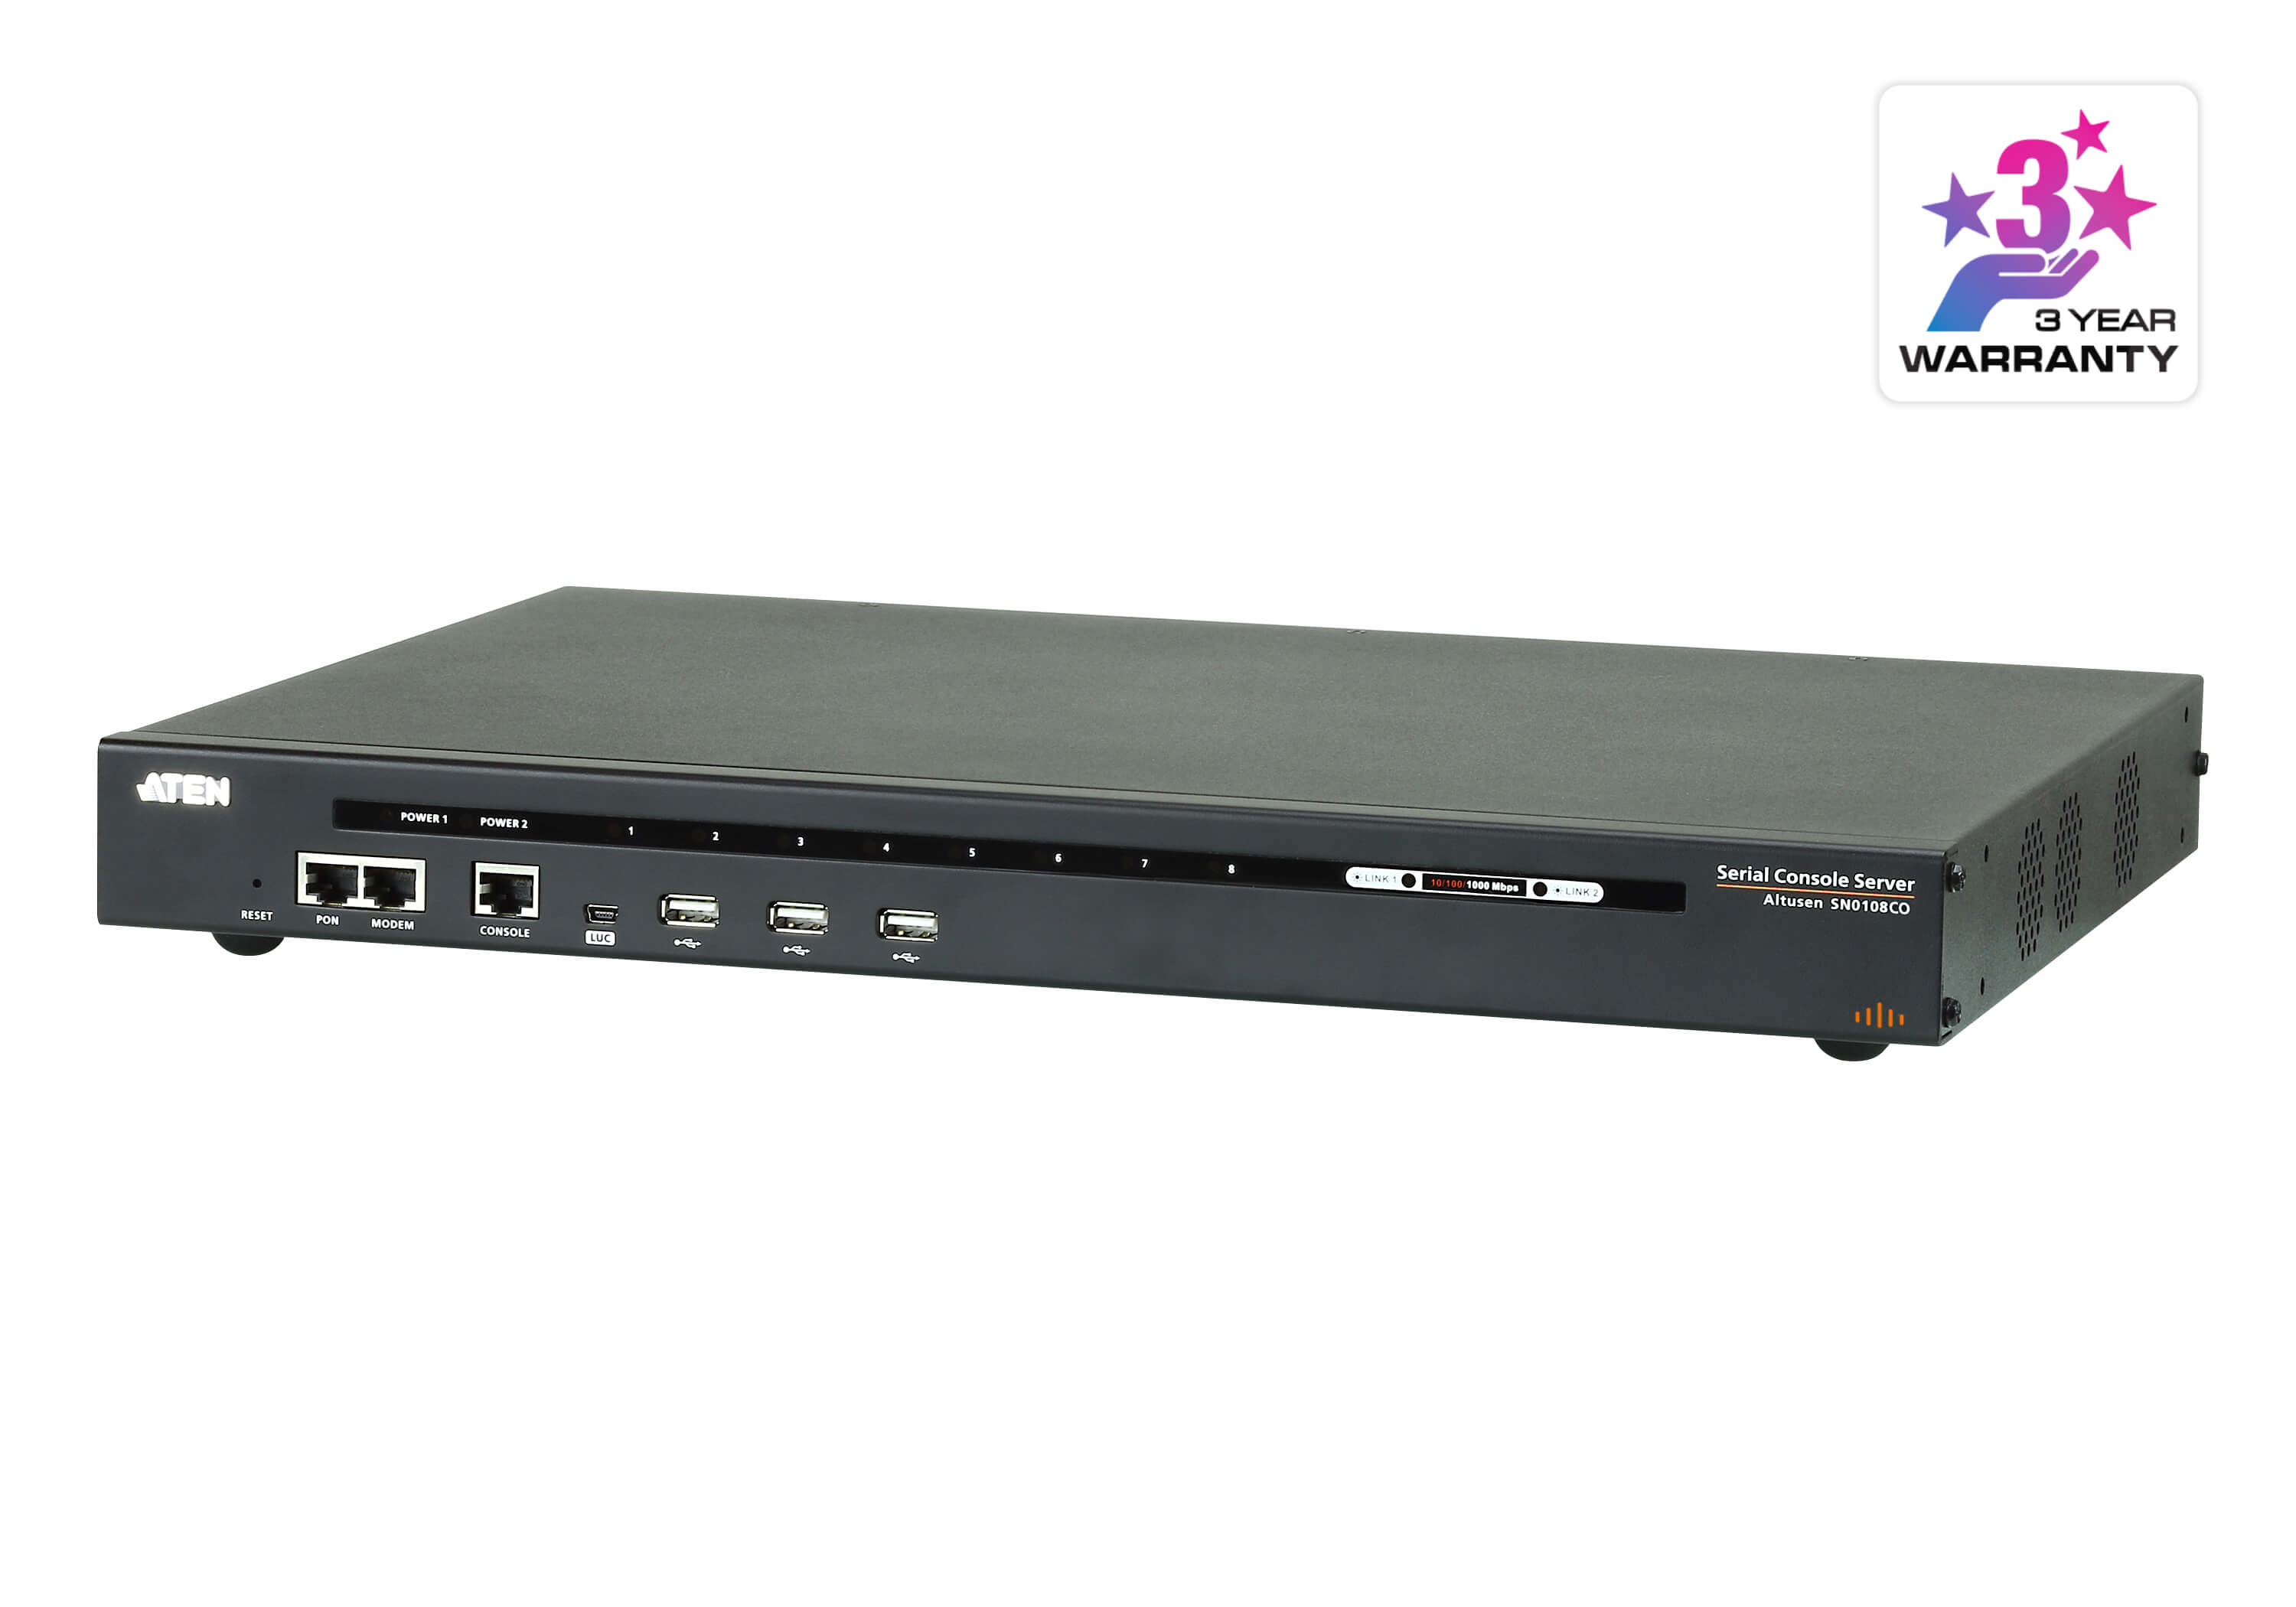 Aten SN0108CO 8-Port Serial Console Server